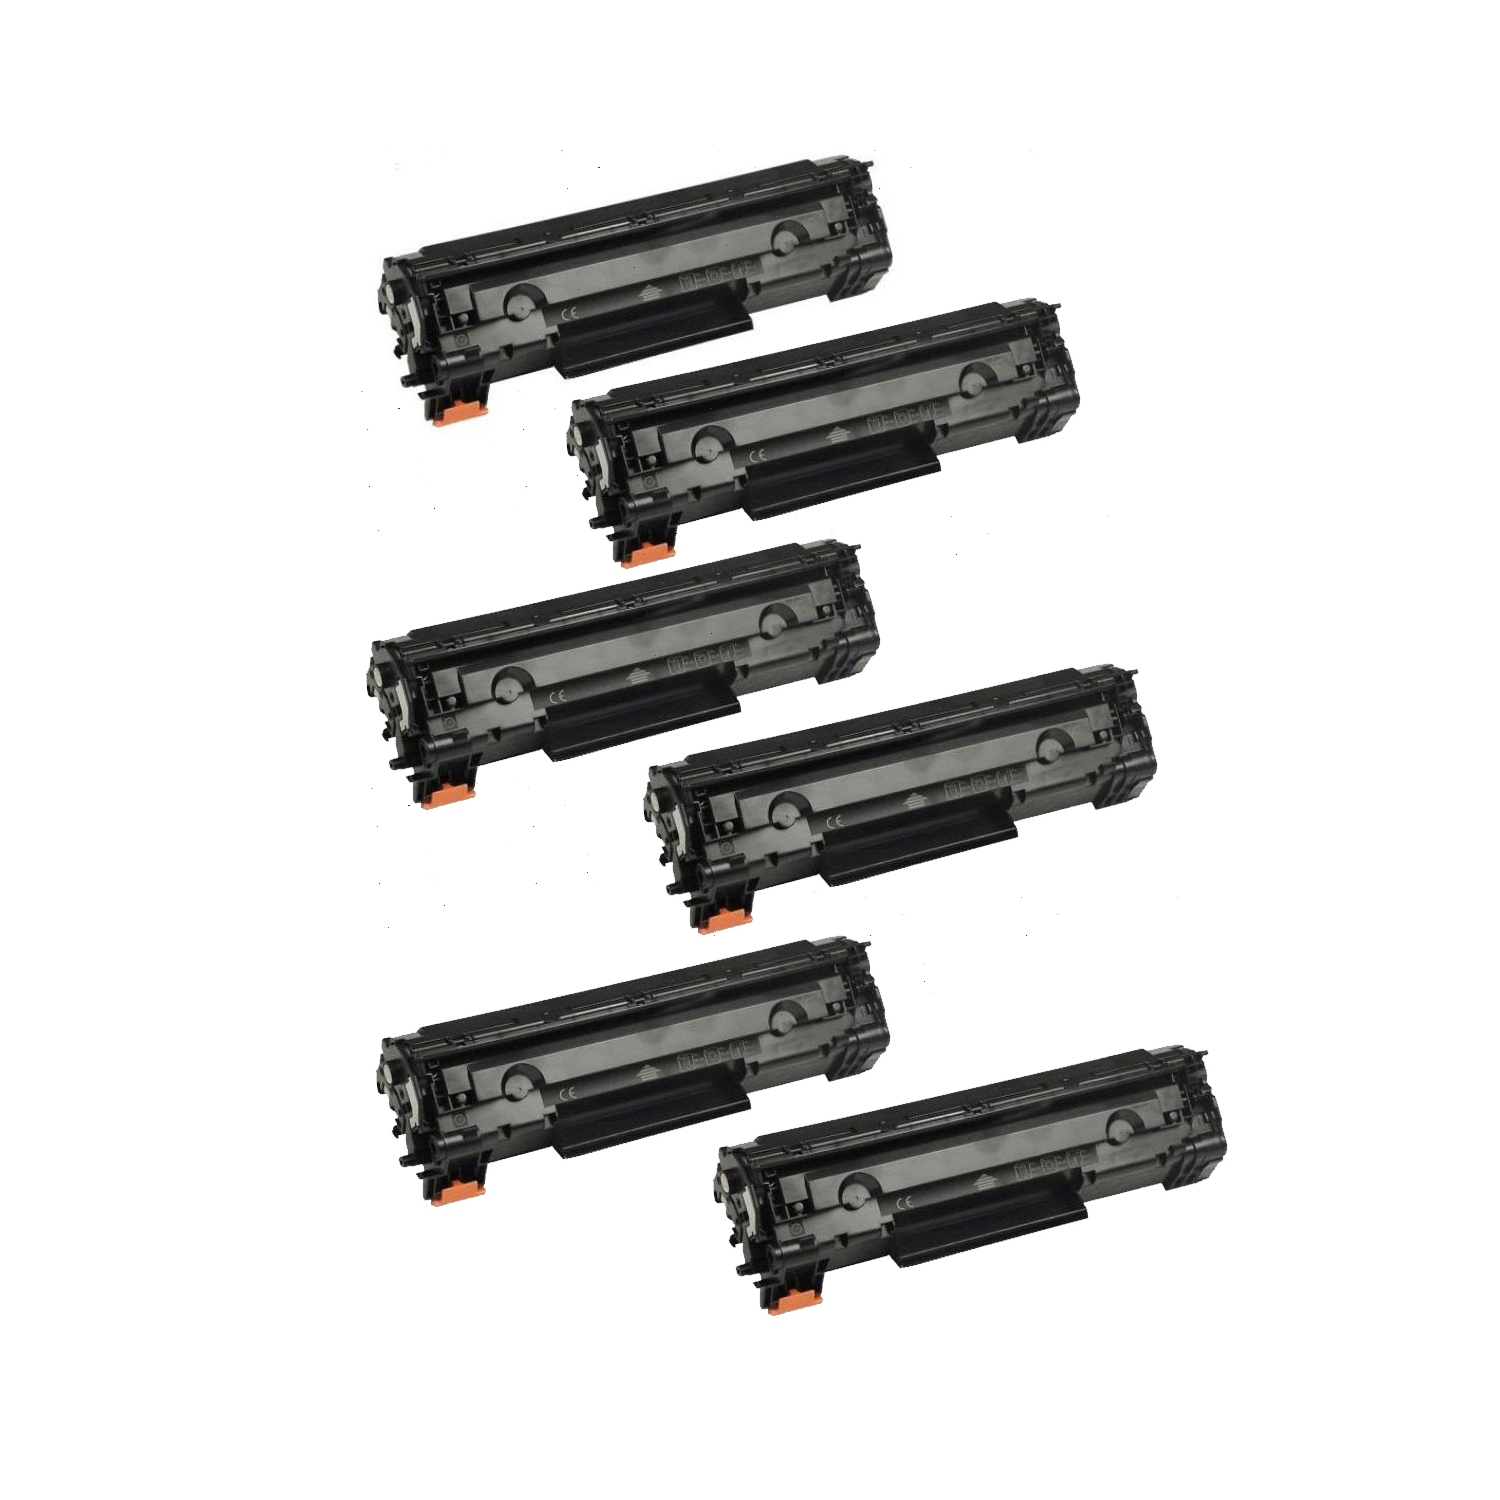 6 Pack CF279A Toner Cartridges Compatible for HP 79A CF279A LaserJet Pro MFP M26a MFP M26nw M12a M12w